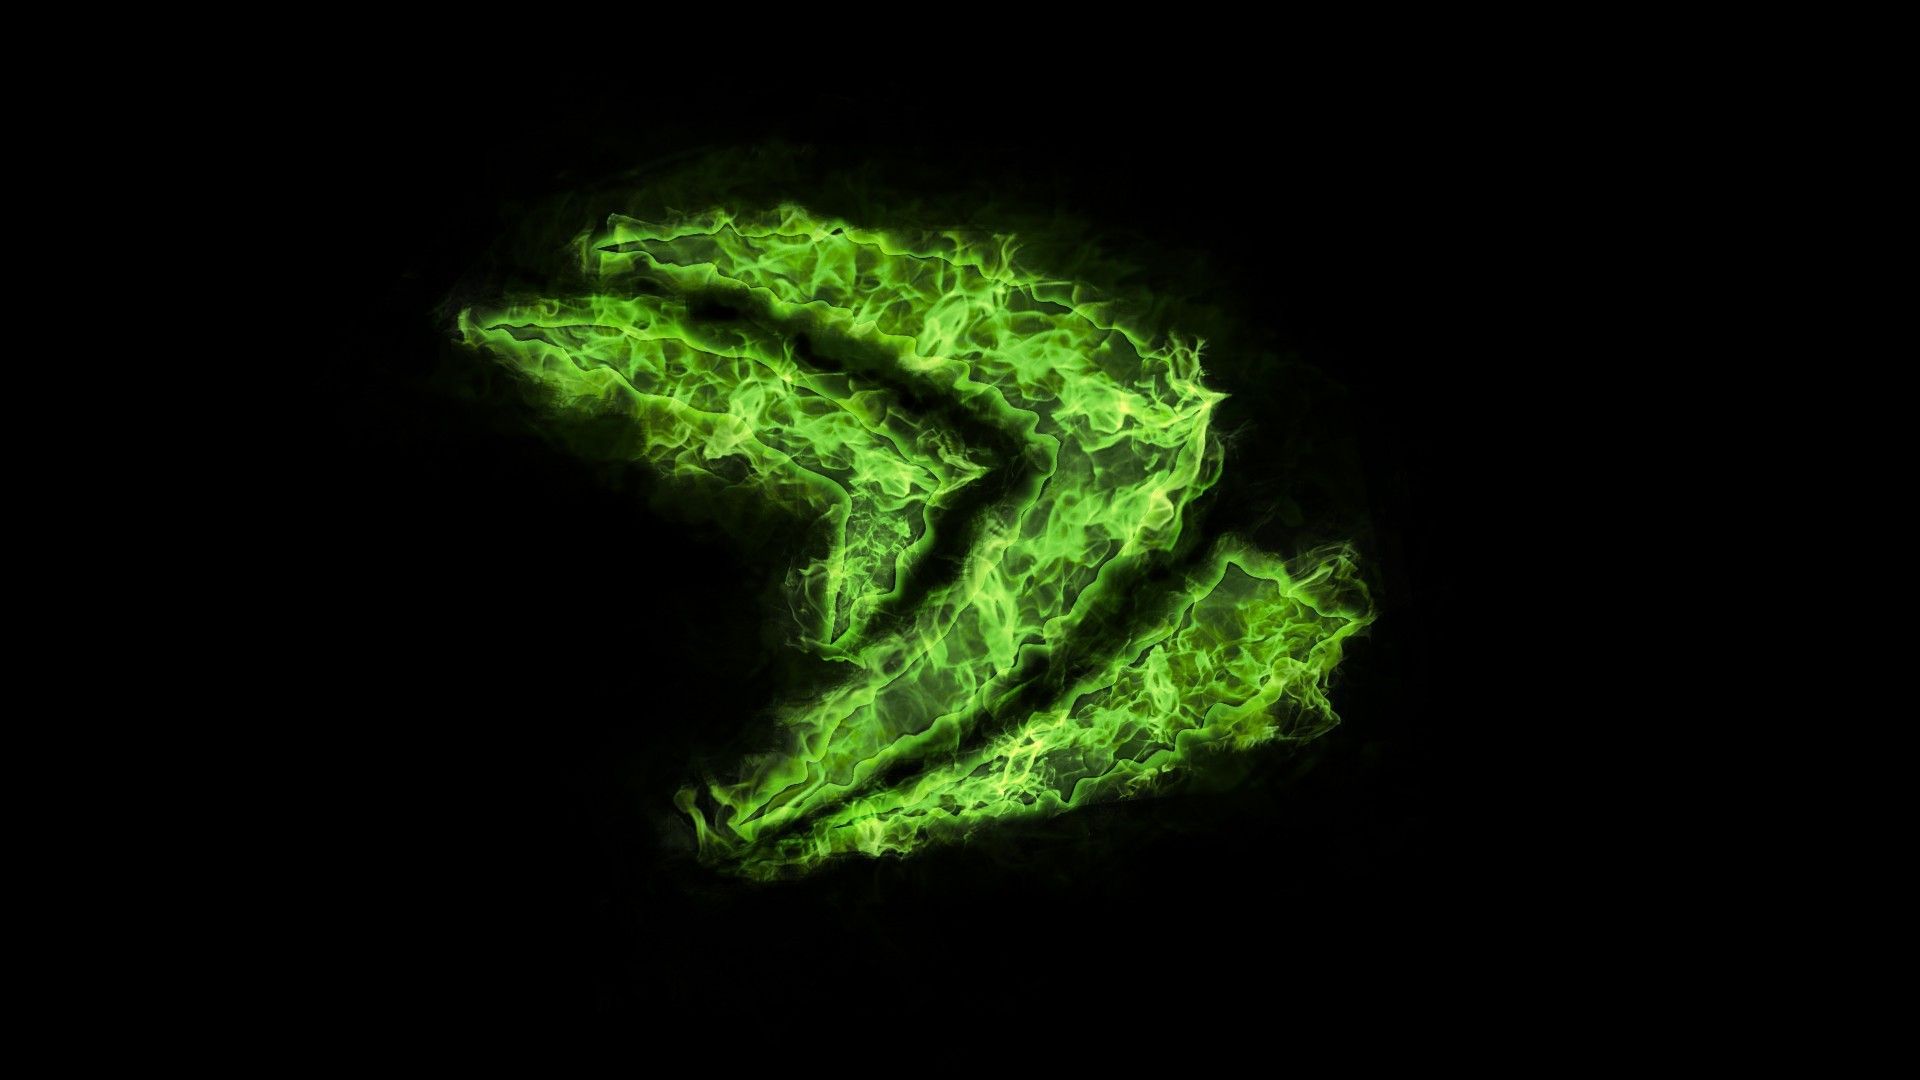 Logo Nvidia green flame wallpaper and image